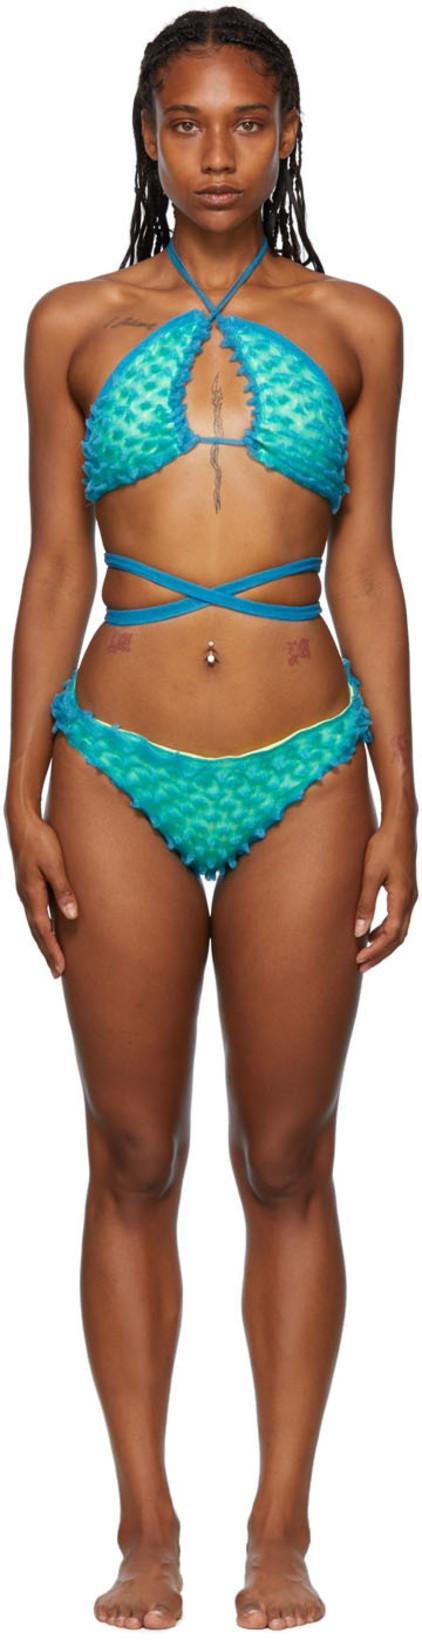 SSENSE Exclusive Blue & Green Whale-Tail Bikini Bottom by CHET LO